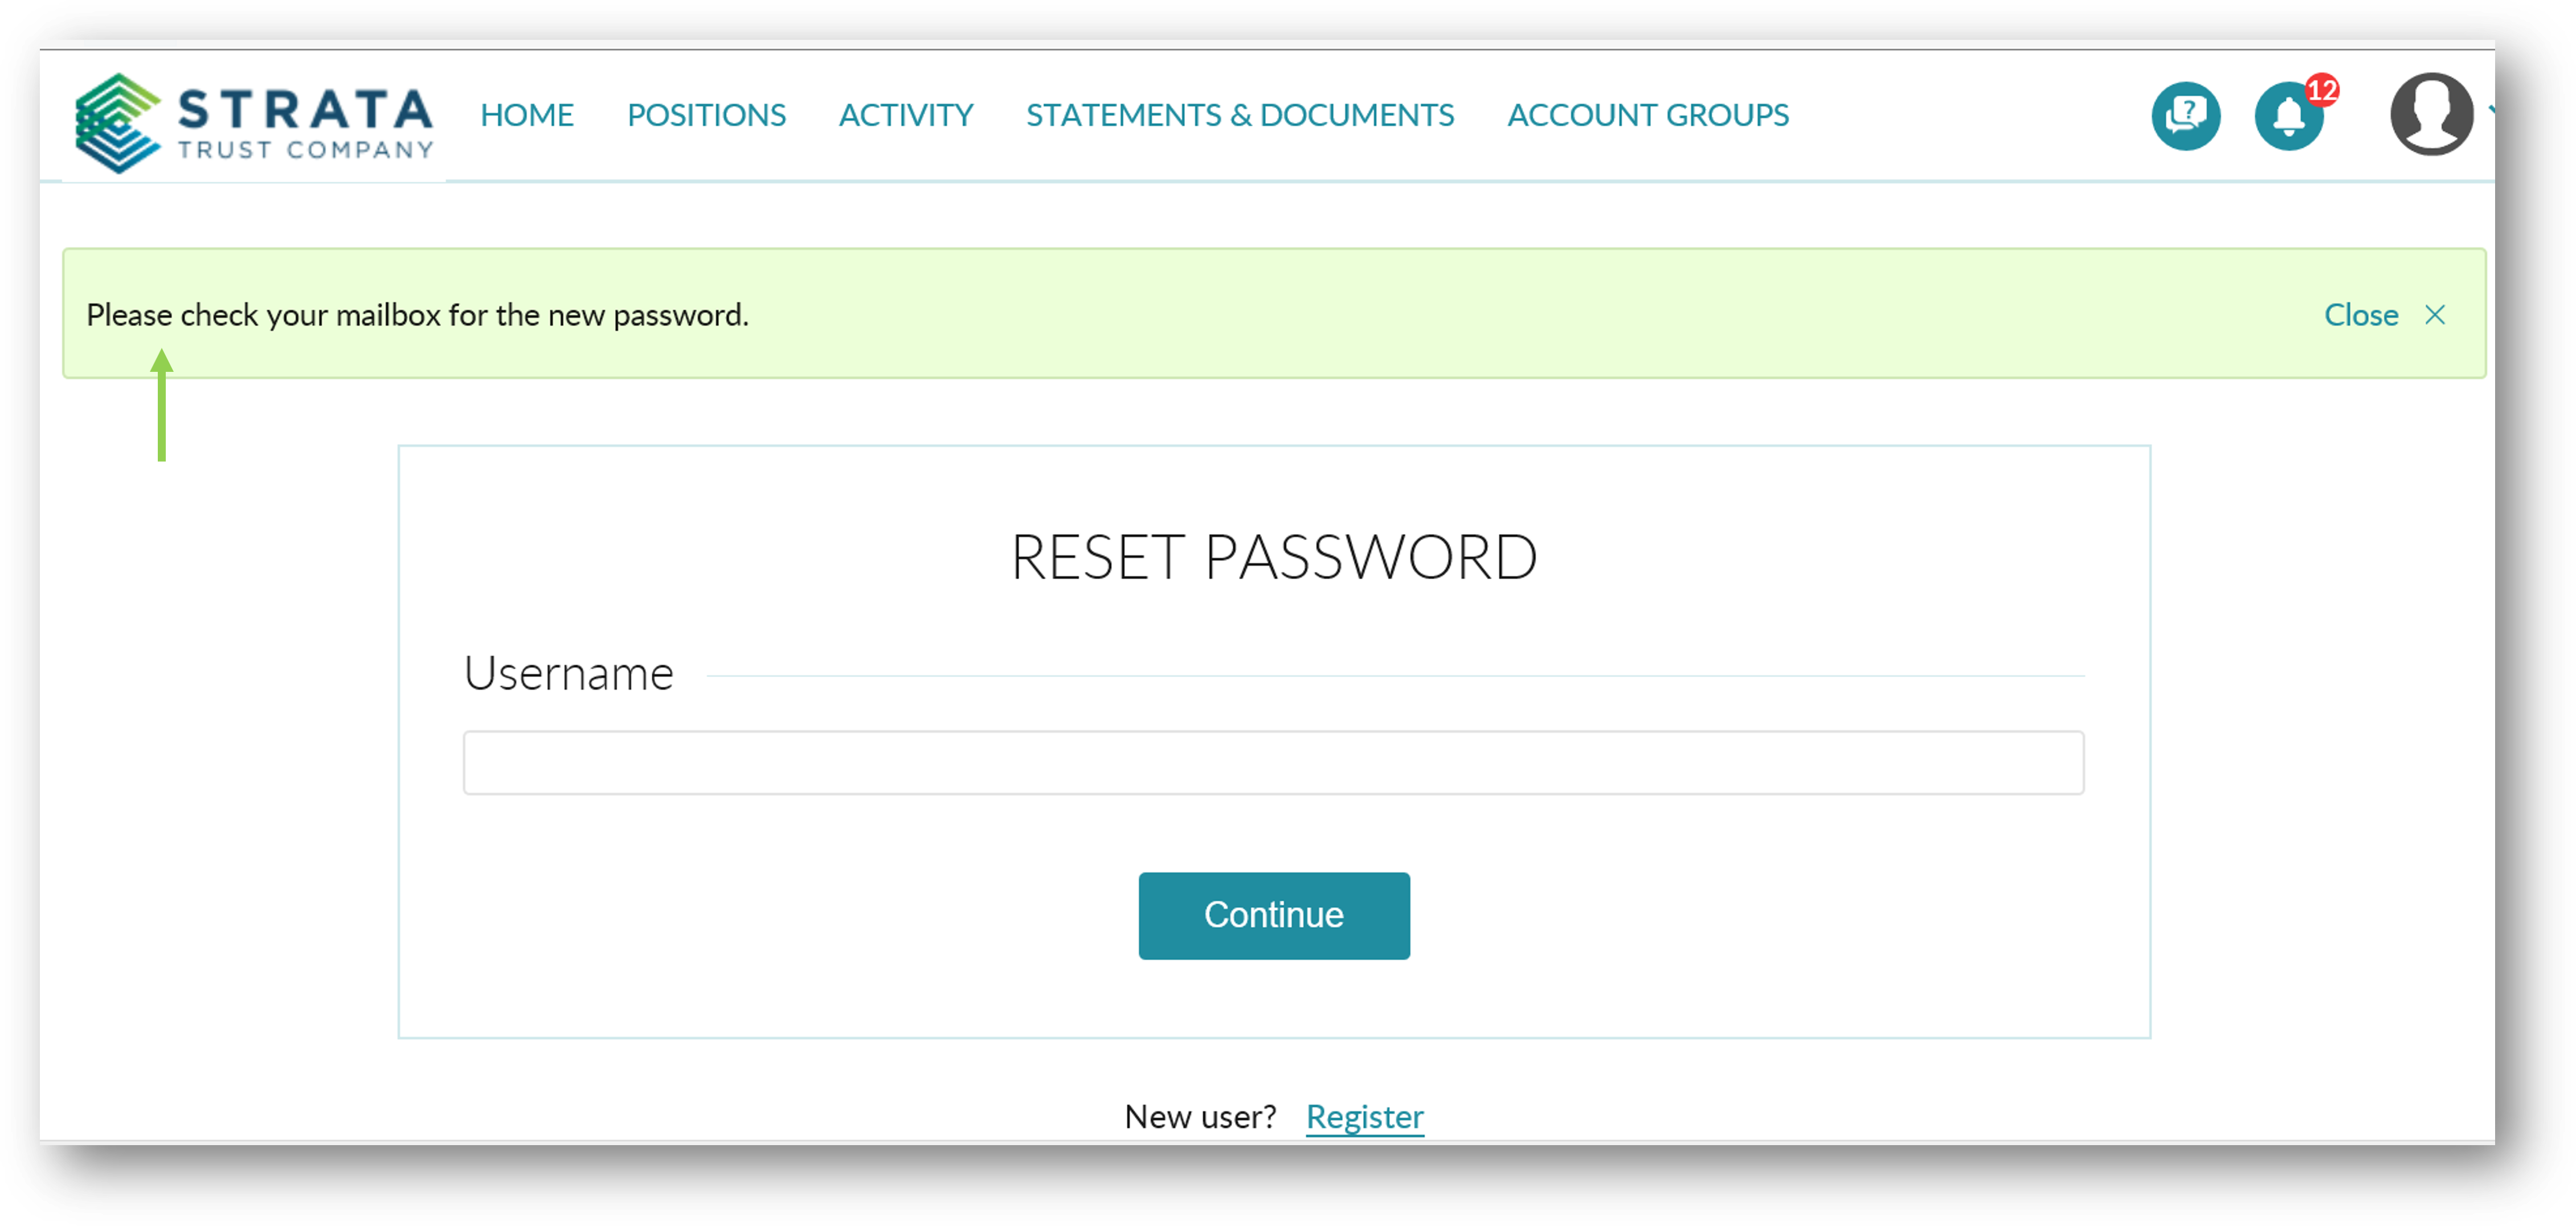 mweb password change request form